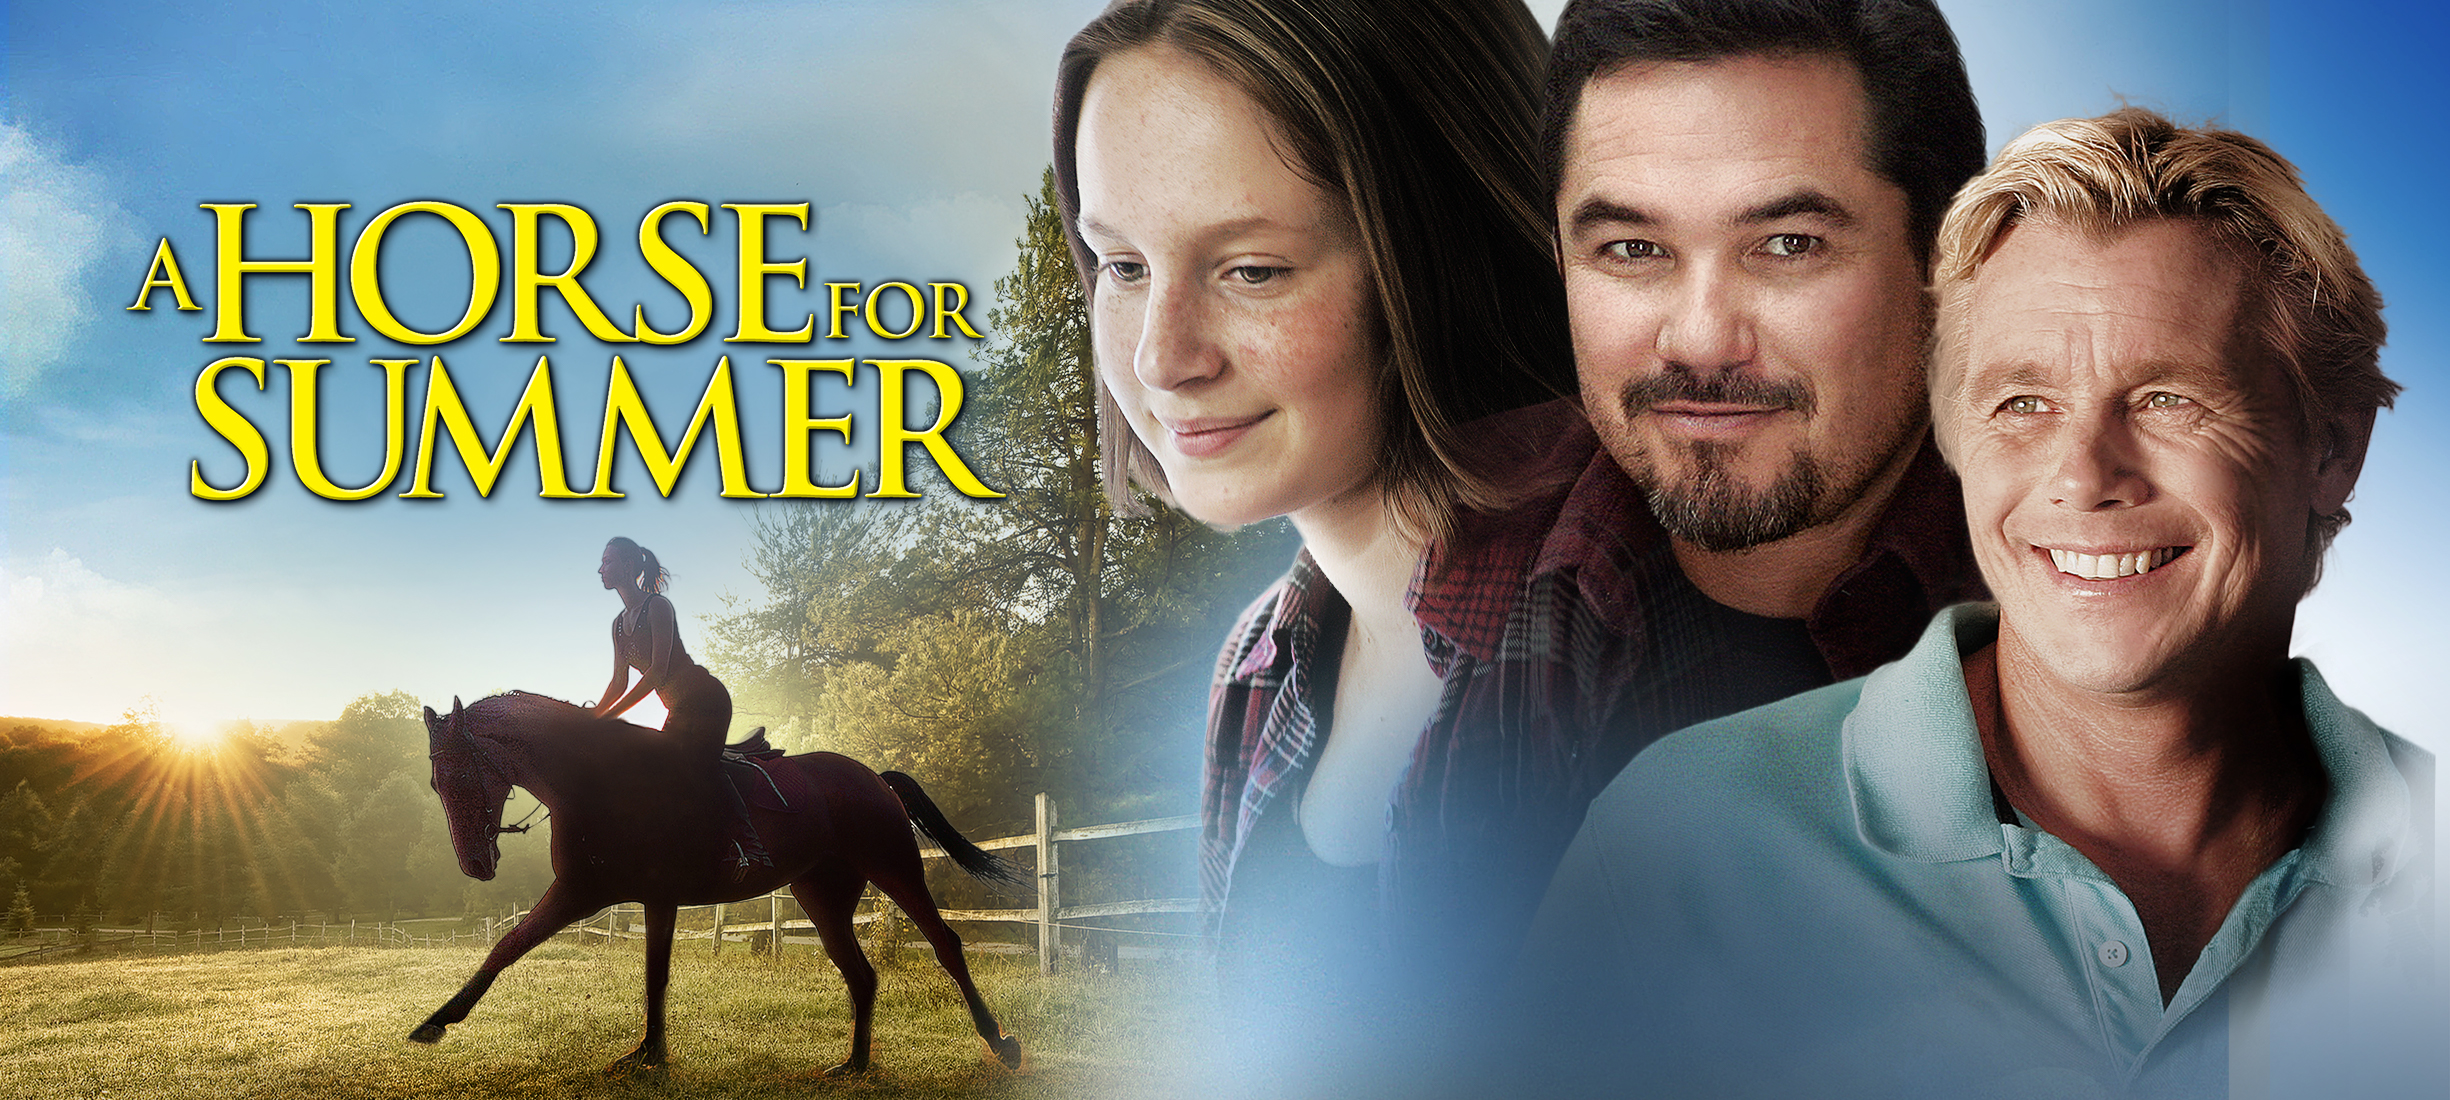 دانلود فیلم A Horse for Summer 2015